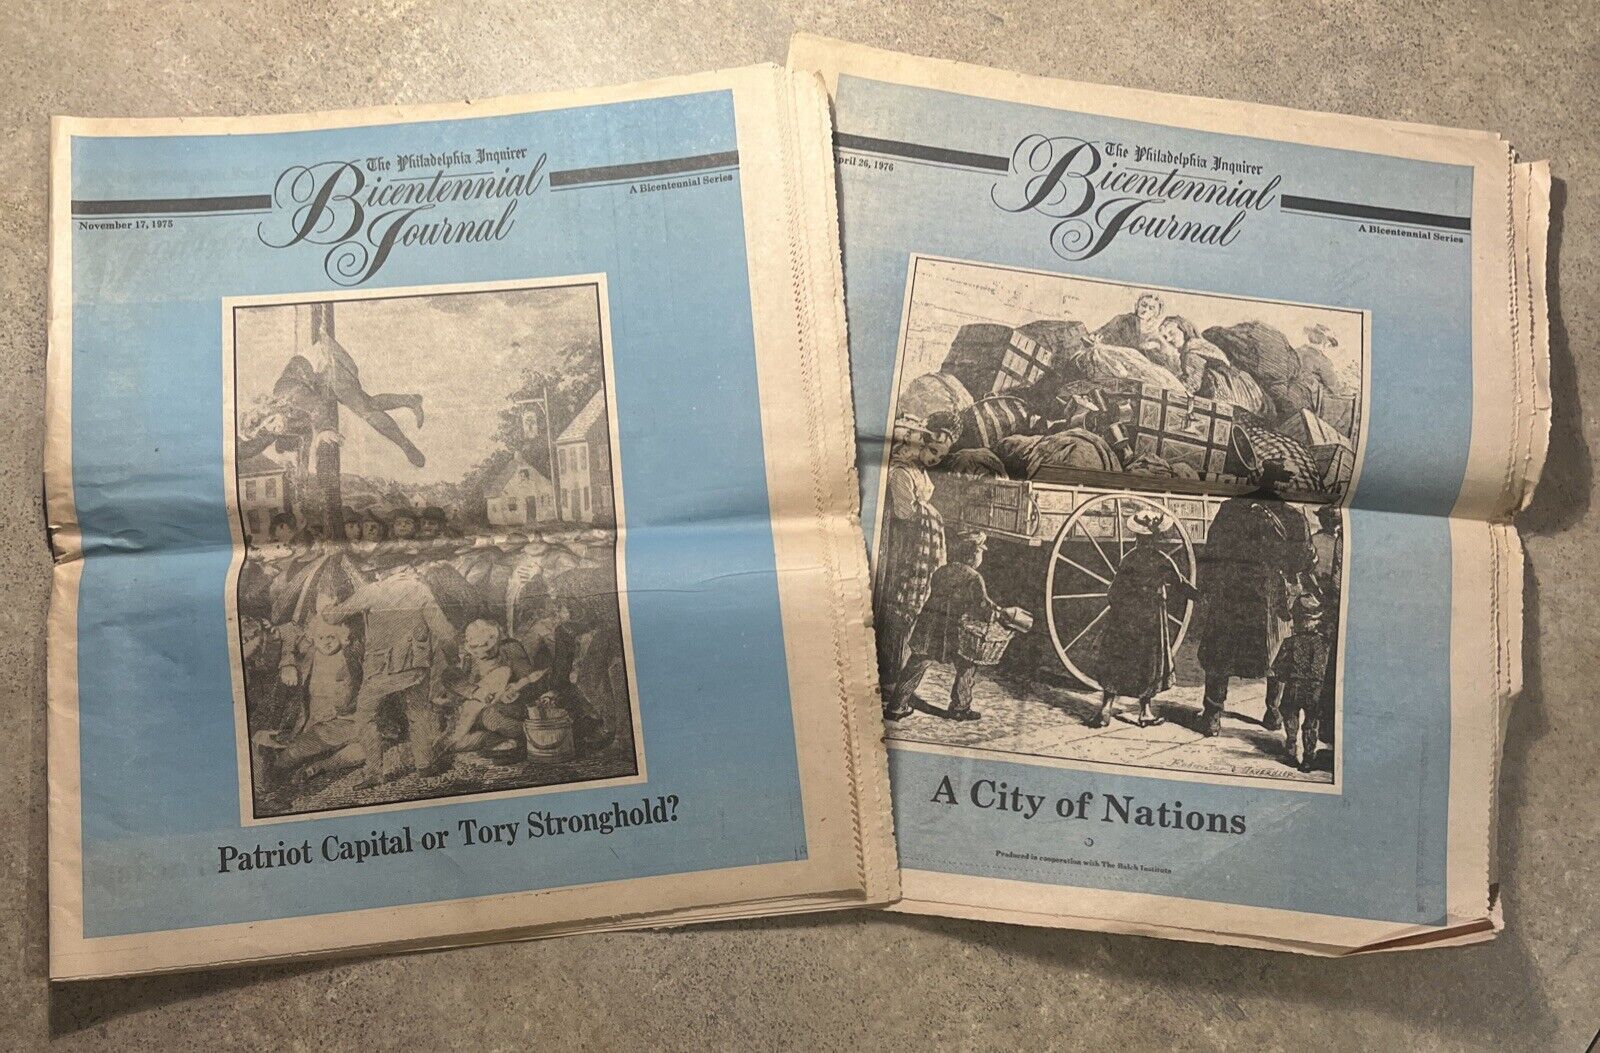 The Philadelphia Inquirer-Bicentennial Journal, Nov 1975 & April 1976